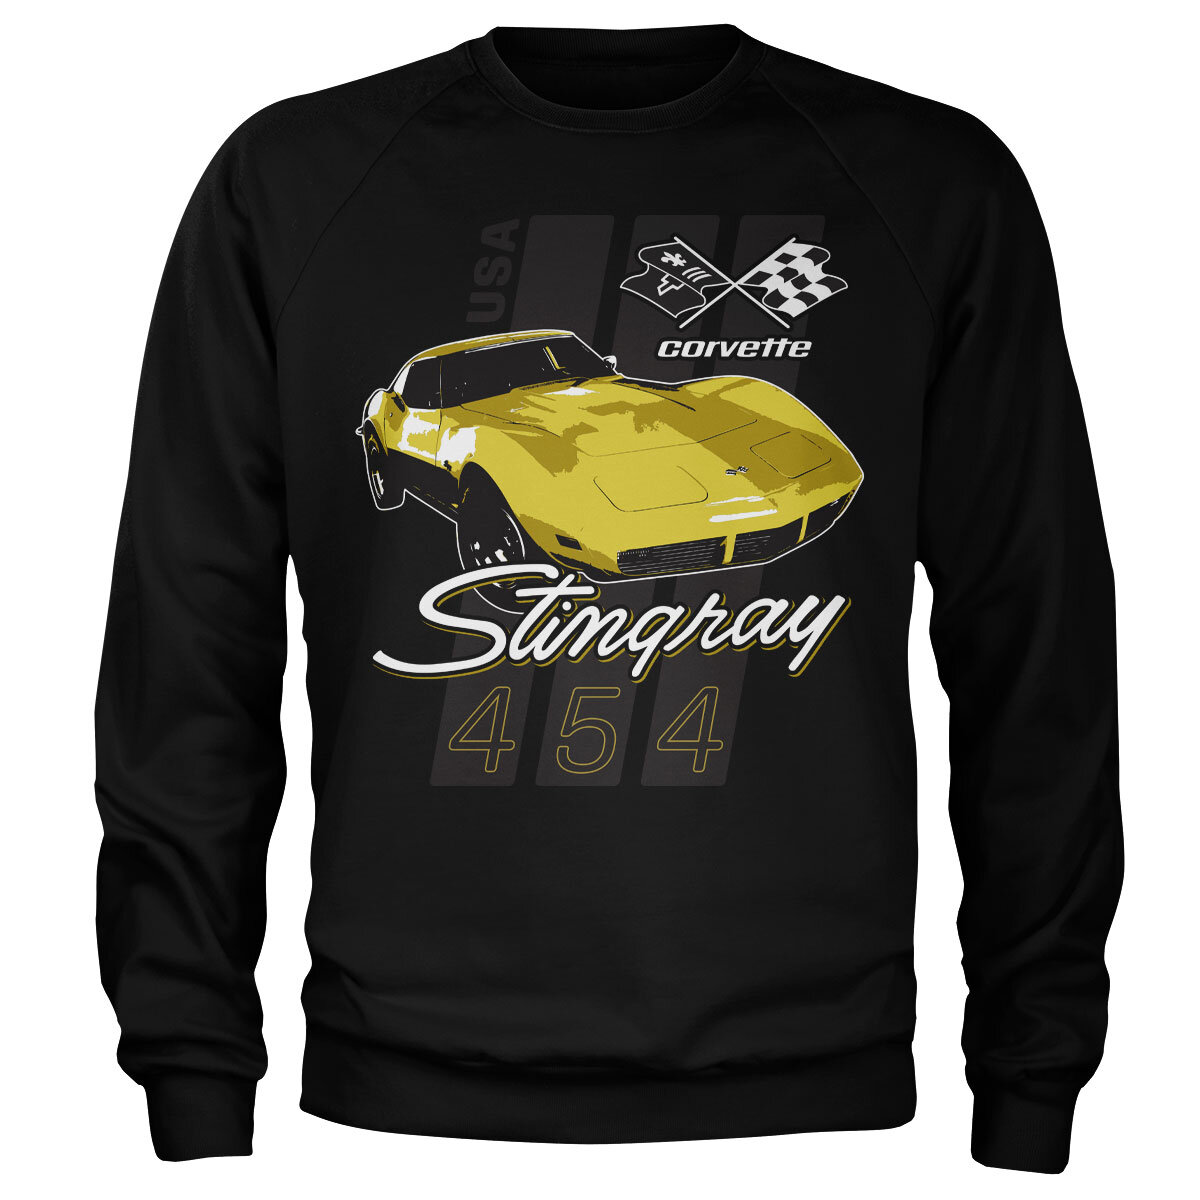 Corvette Stingray 454 Sweatshirt